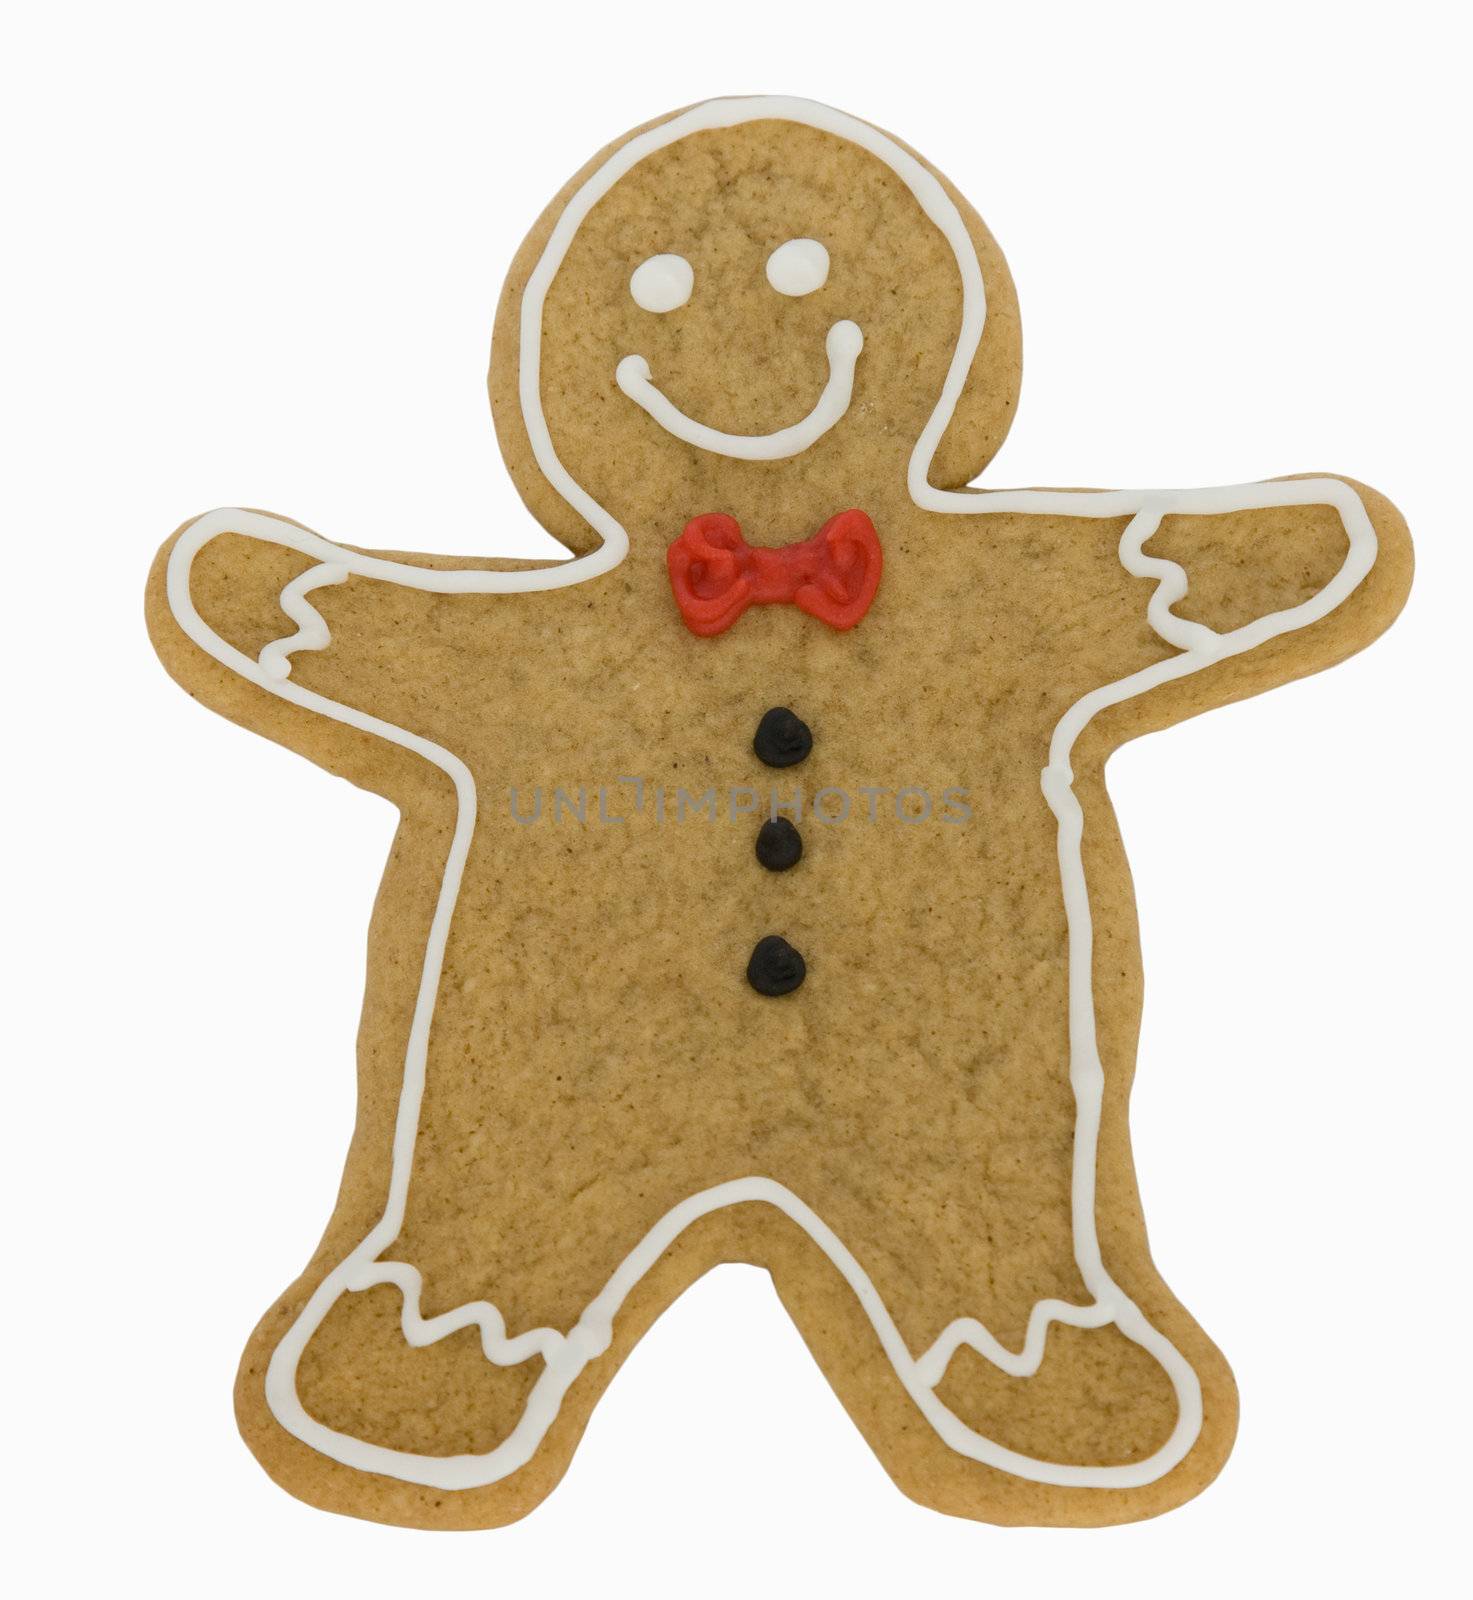 Gingerbread man by RuthBlack